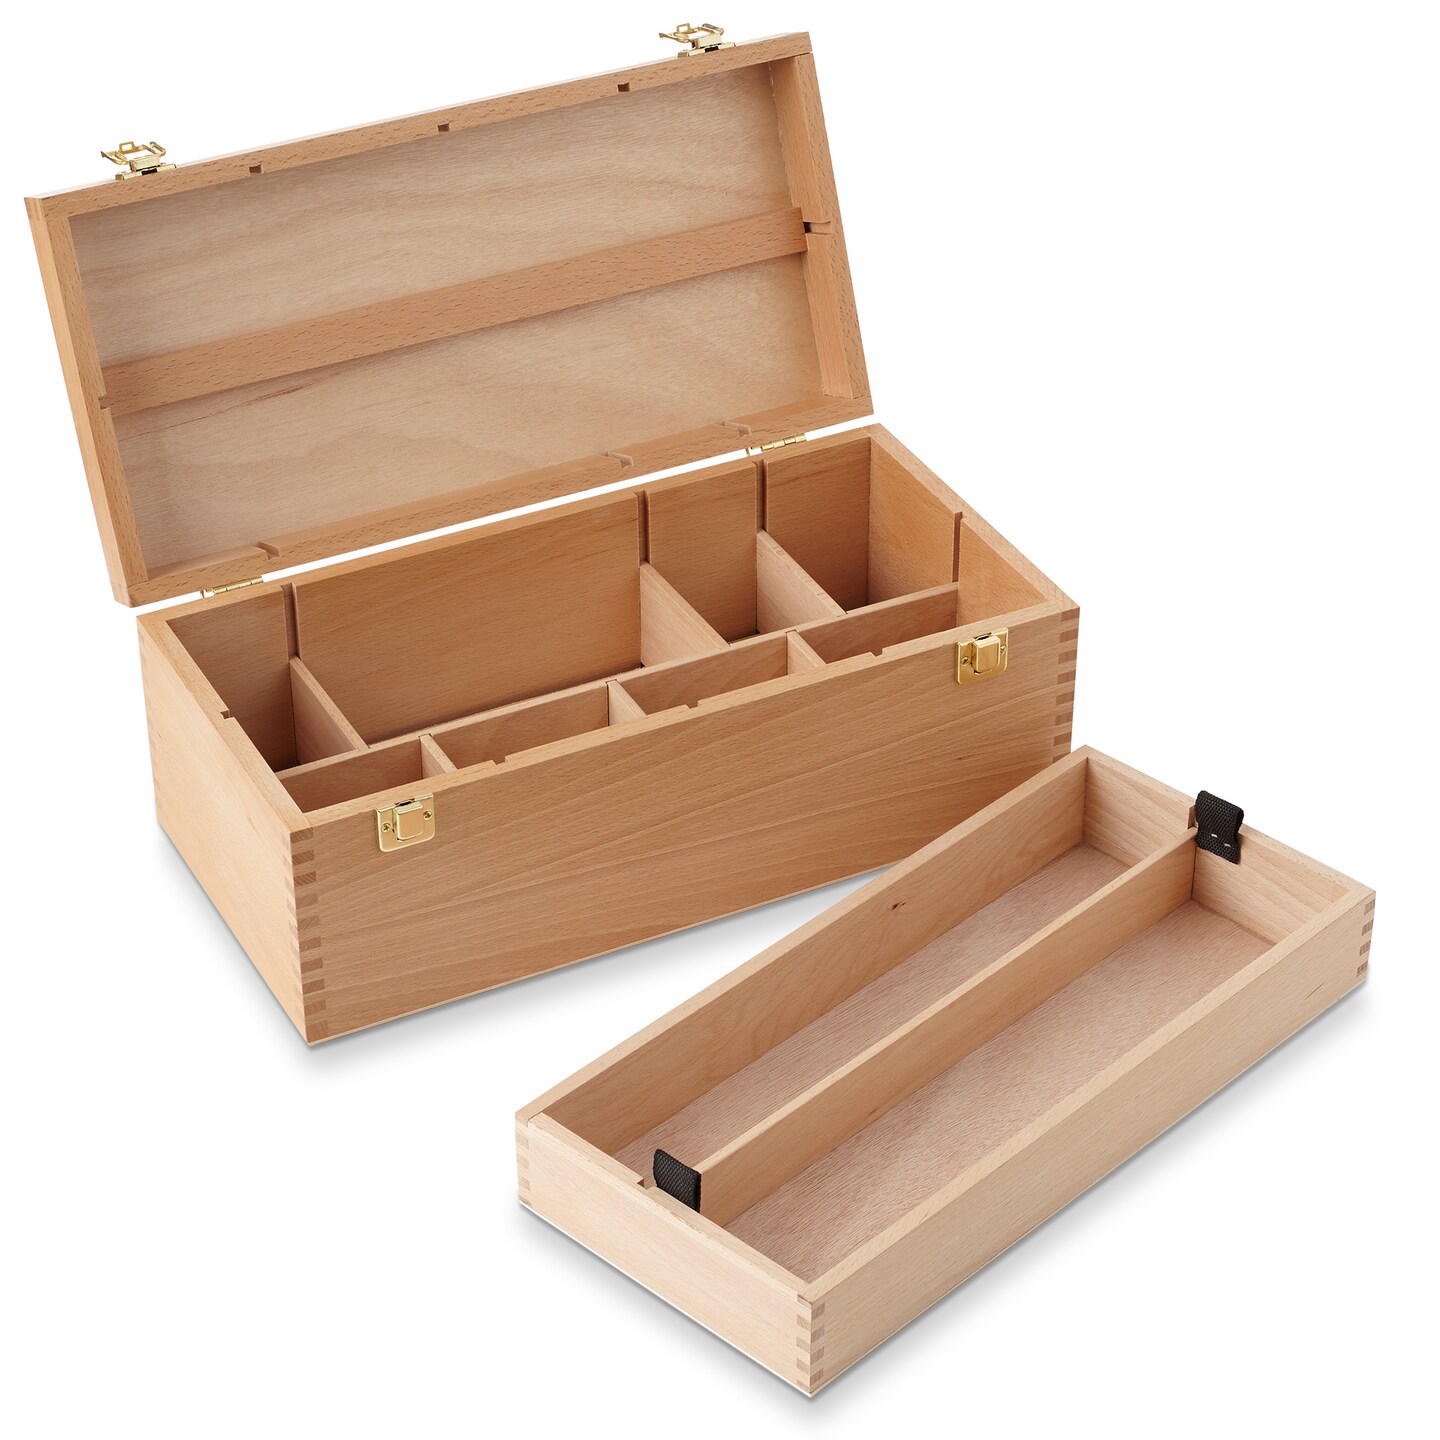 7 Elements Wooden Art Supply Storage Organizer - Large Beechwood